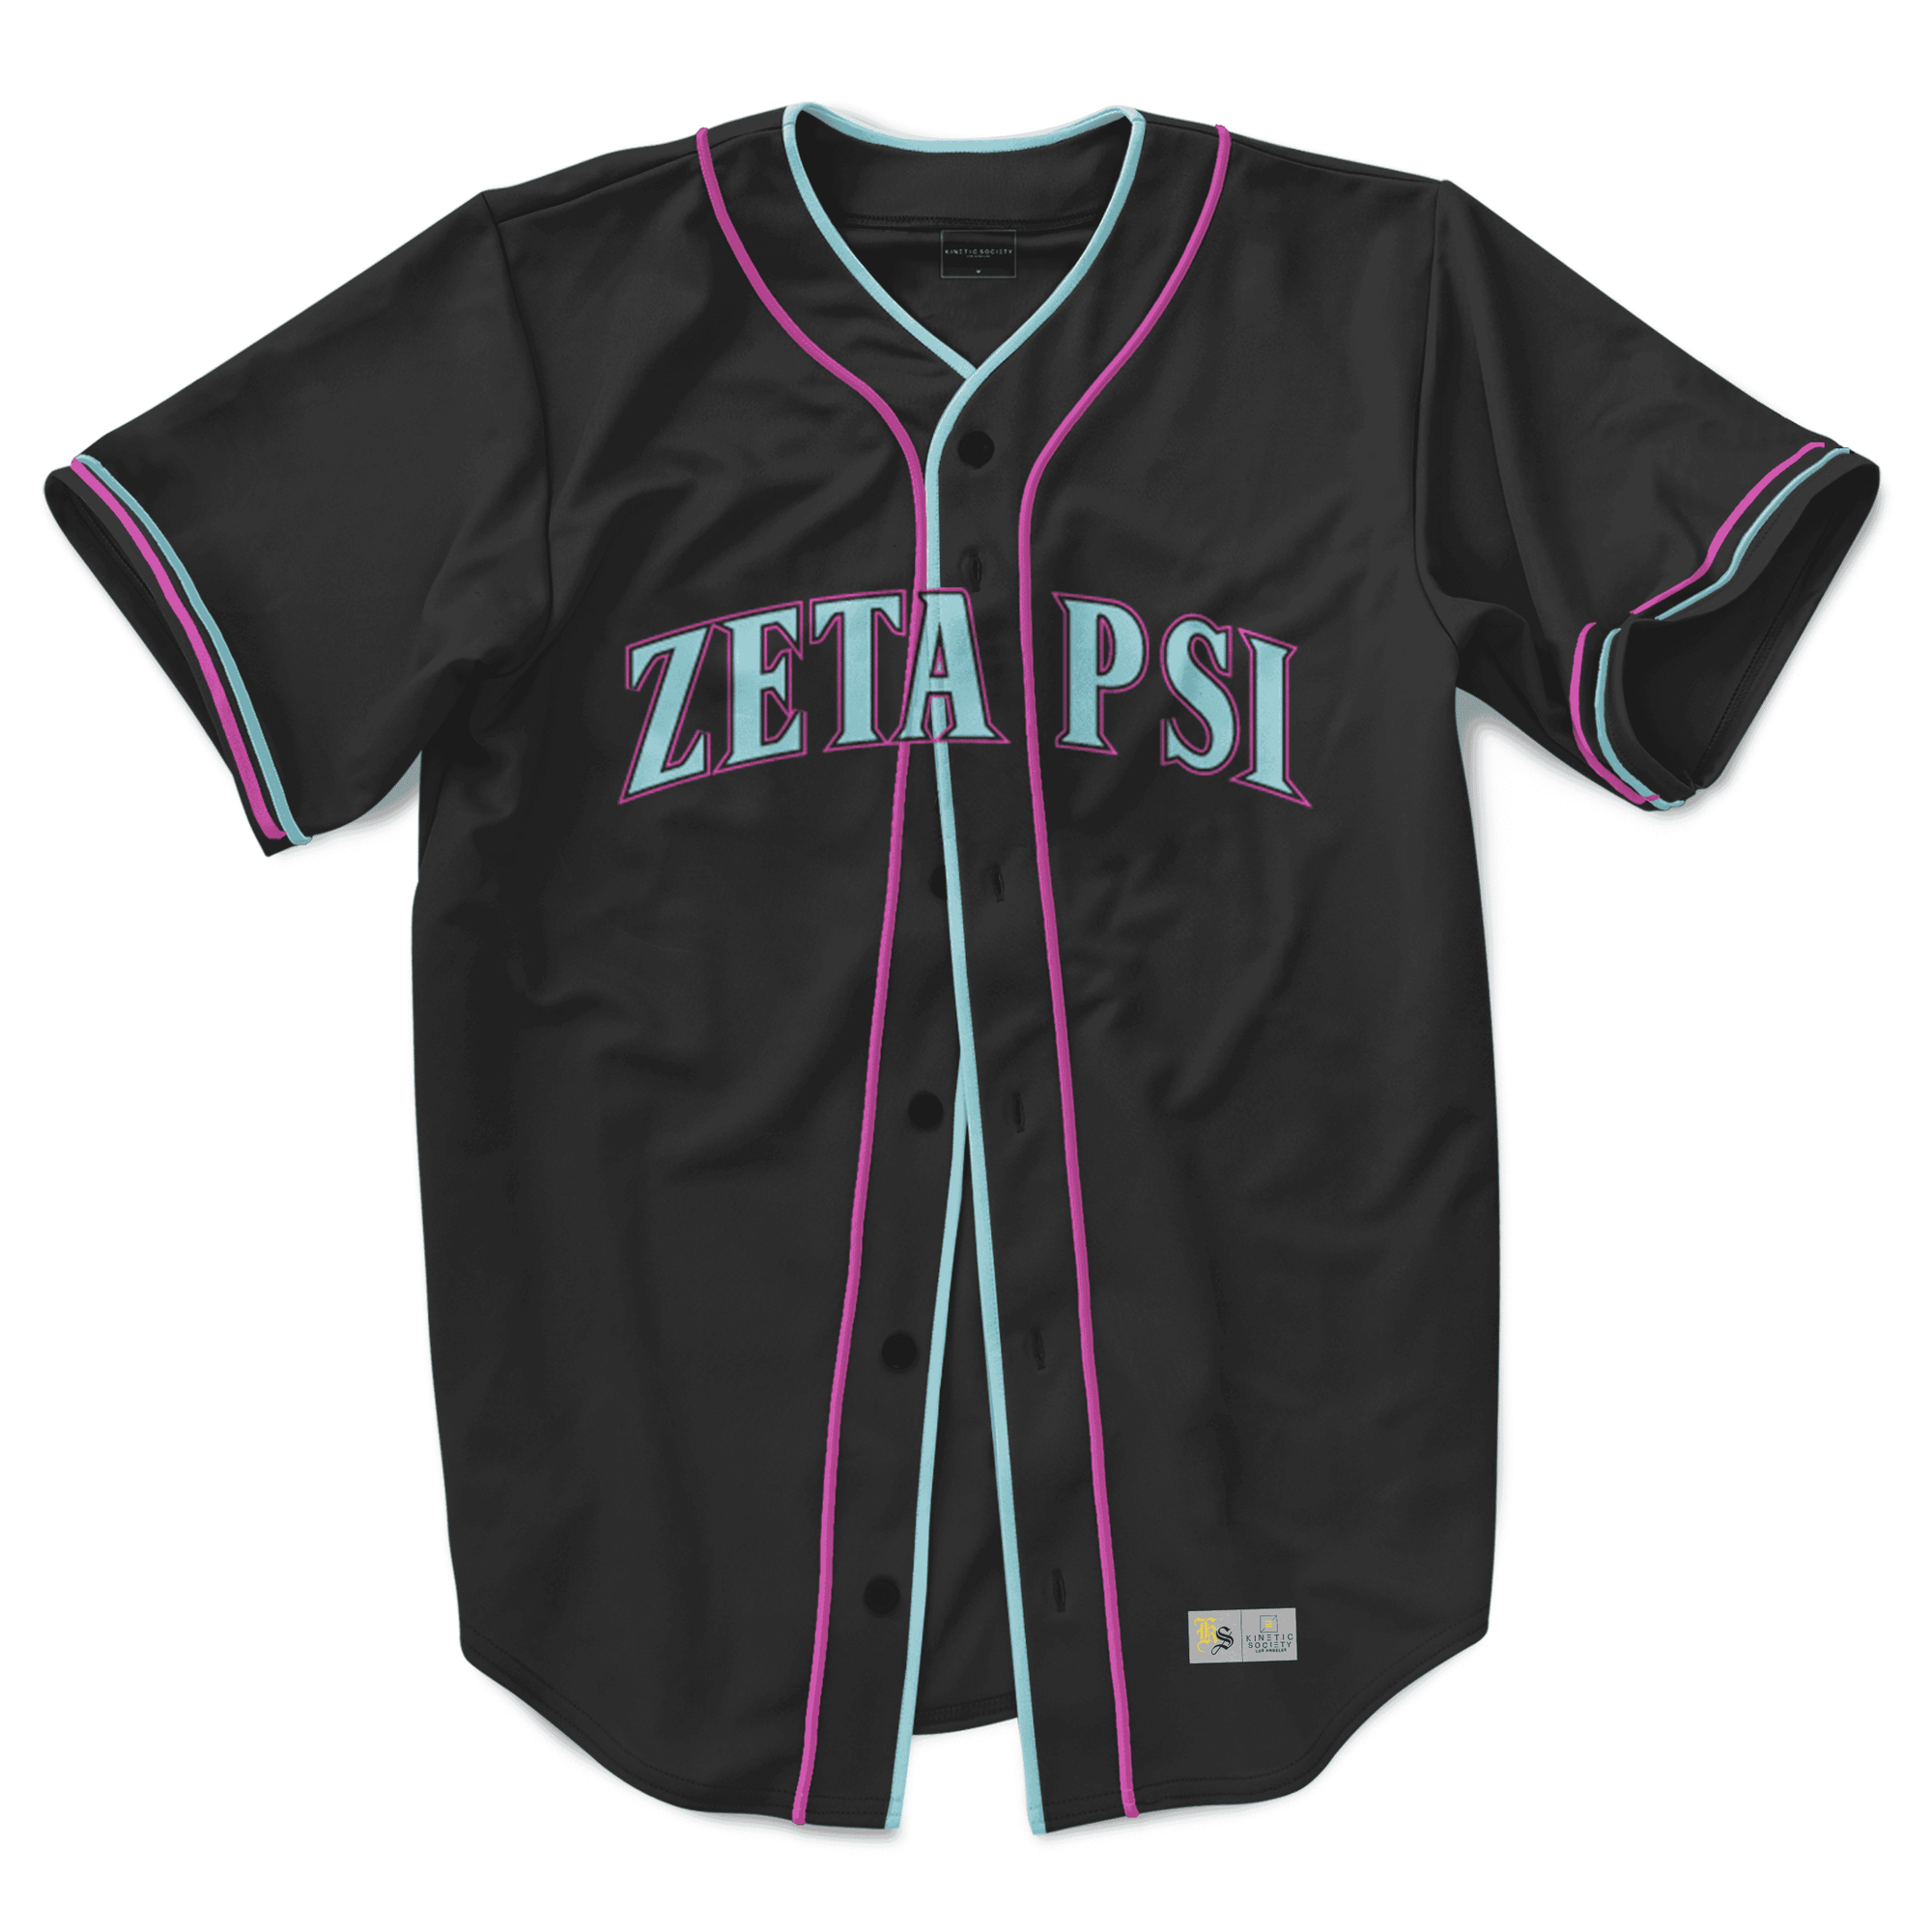 Zeta Psi - Neo Nightlife Baseball Jersey